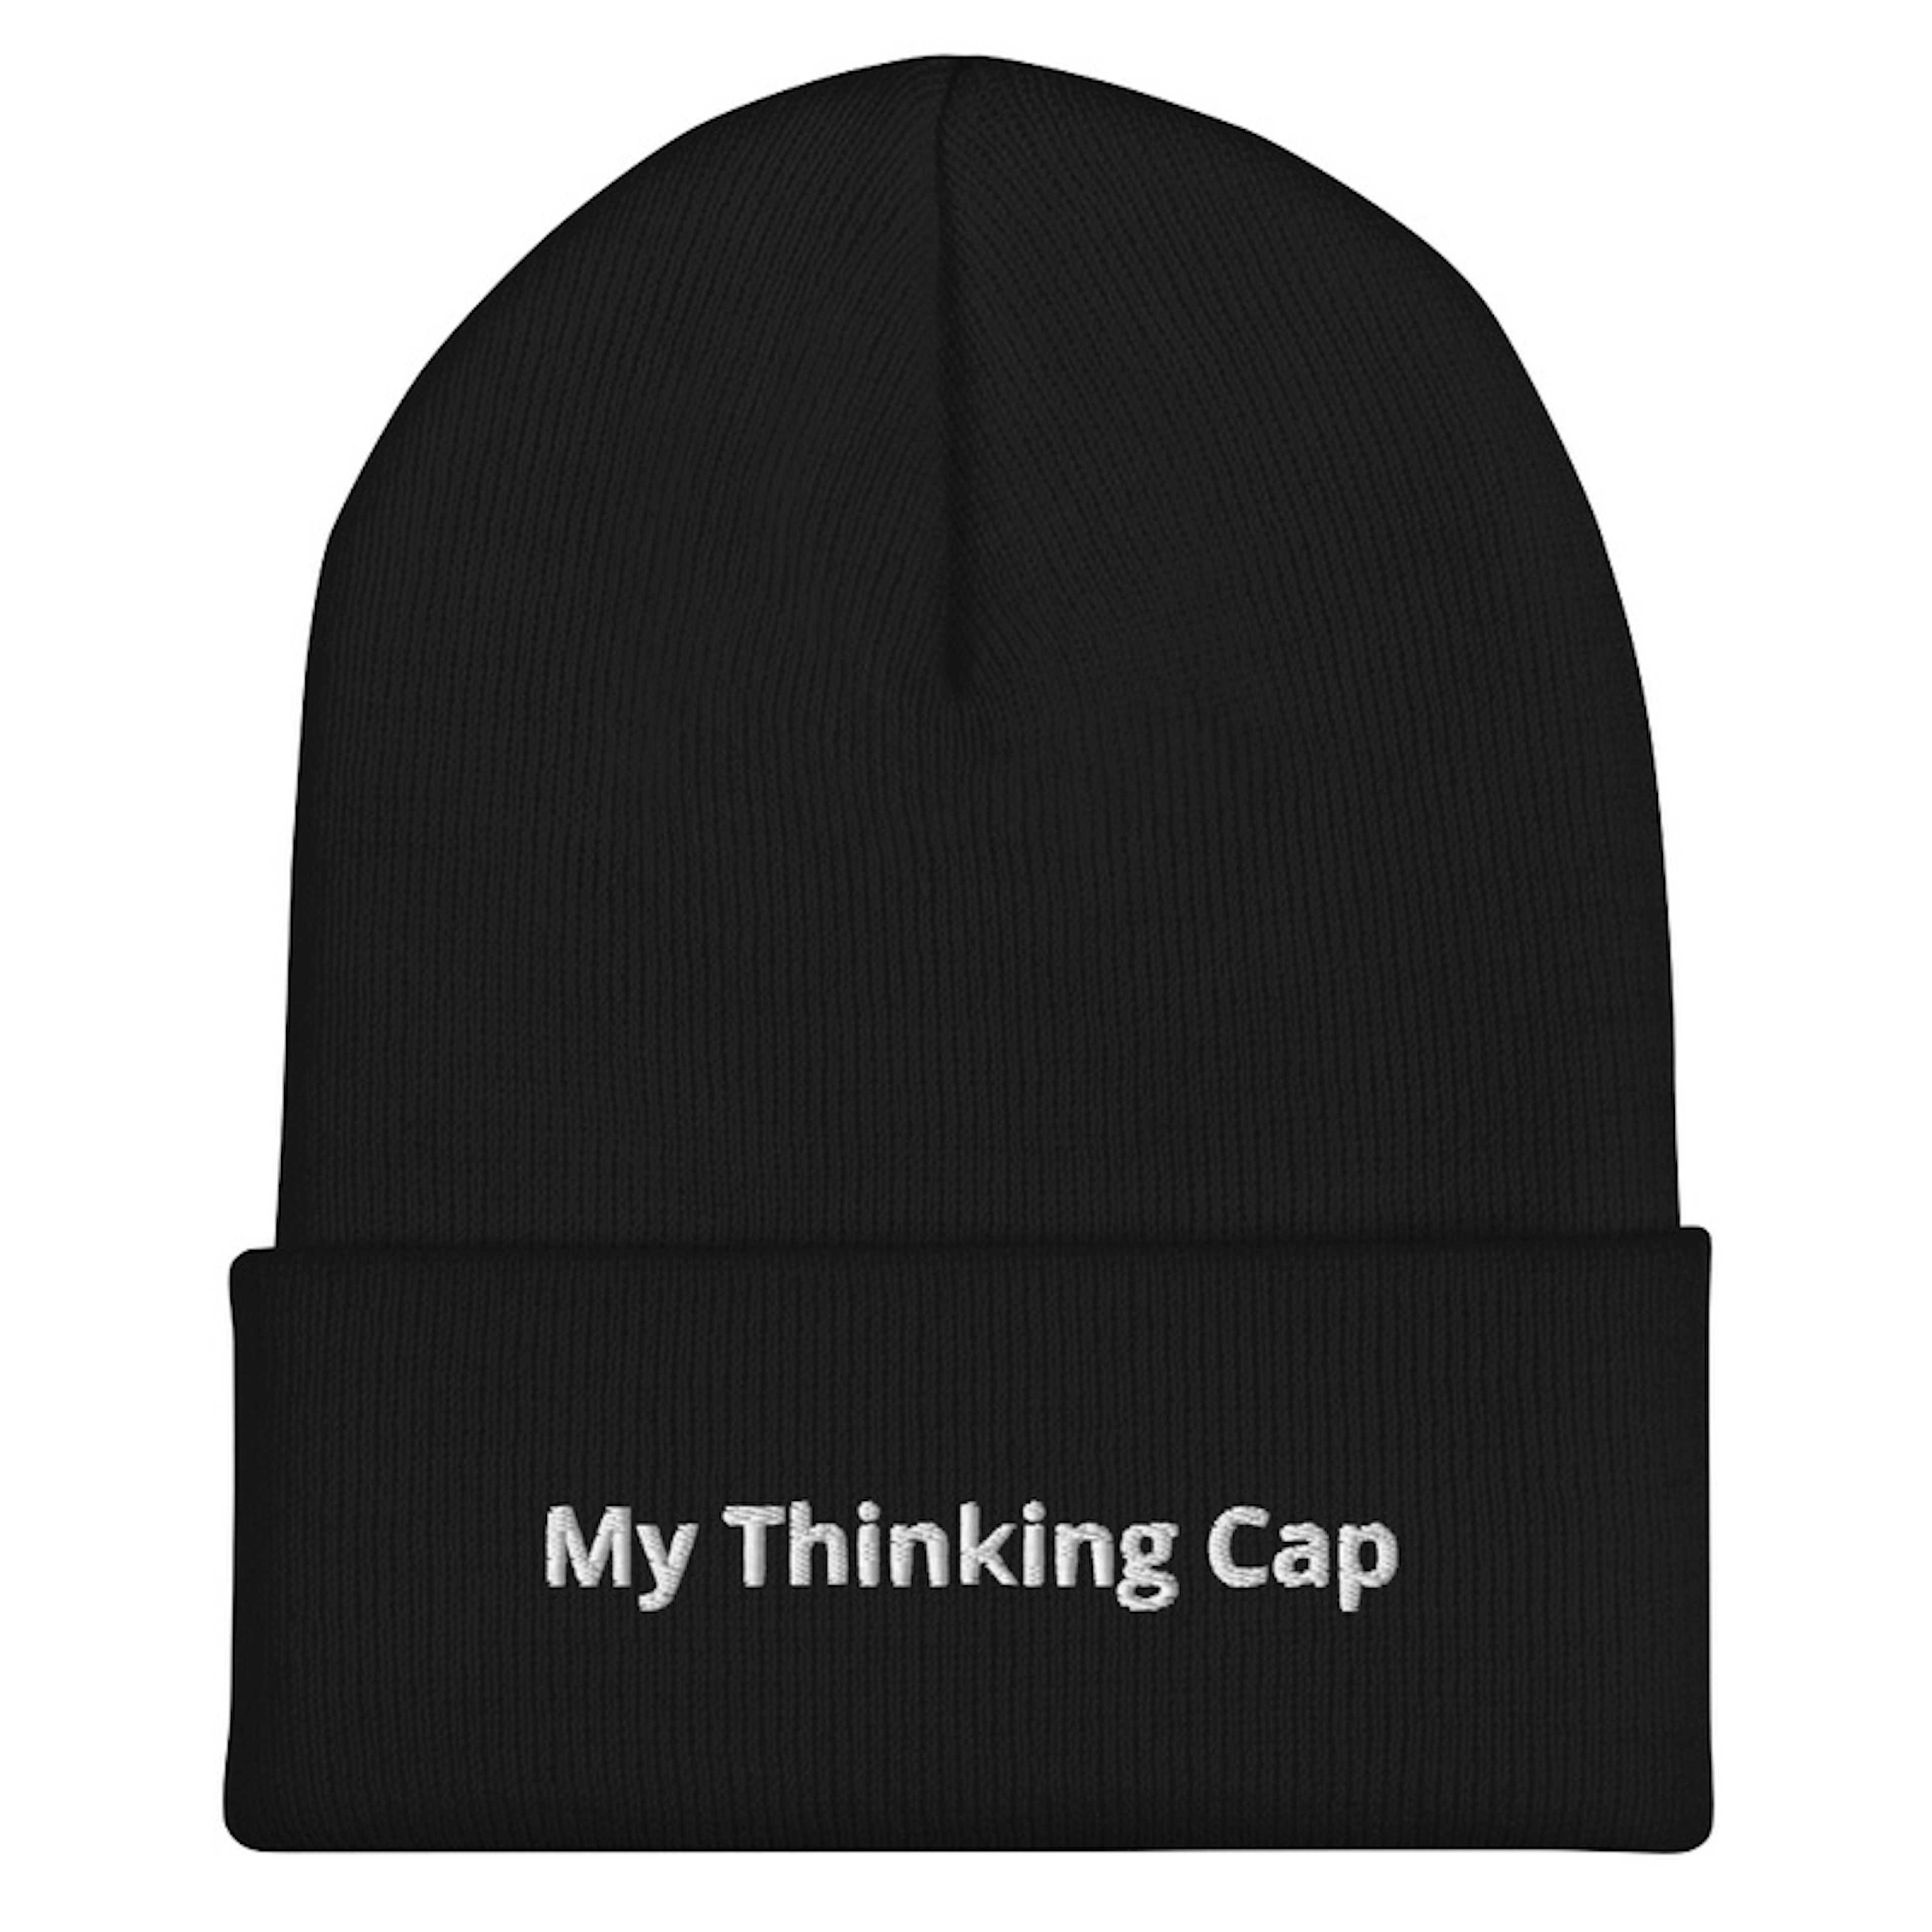 My Thinking Cap